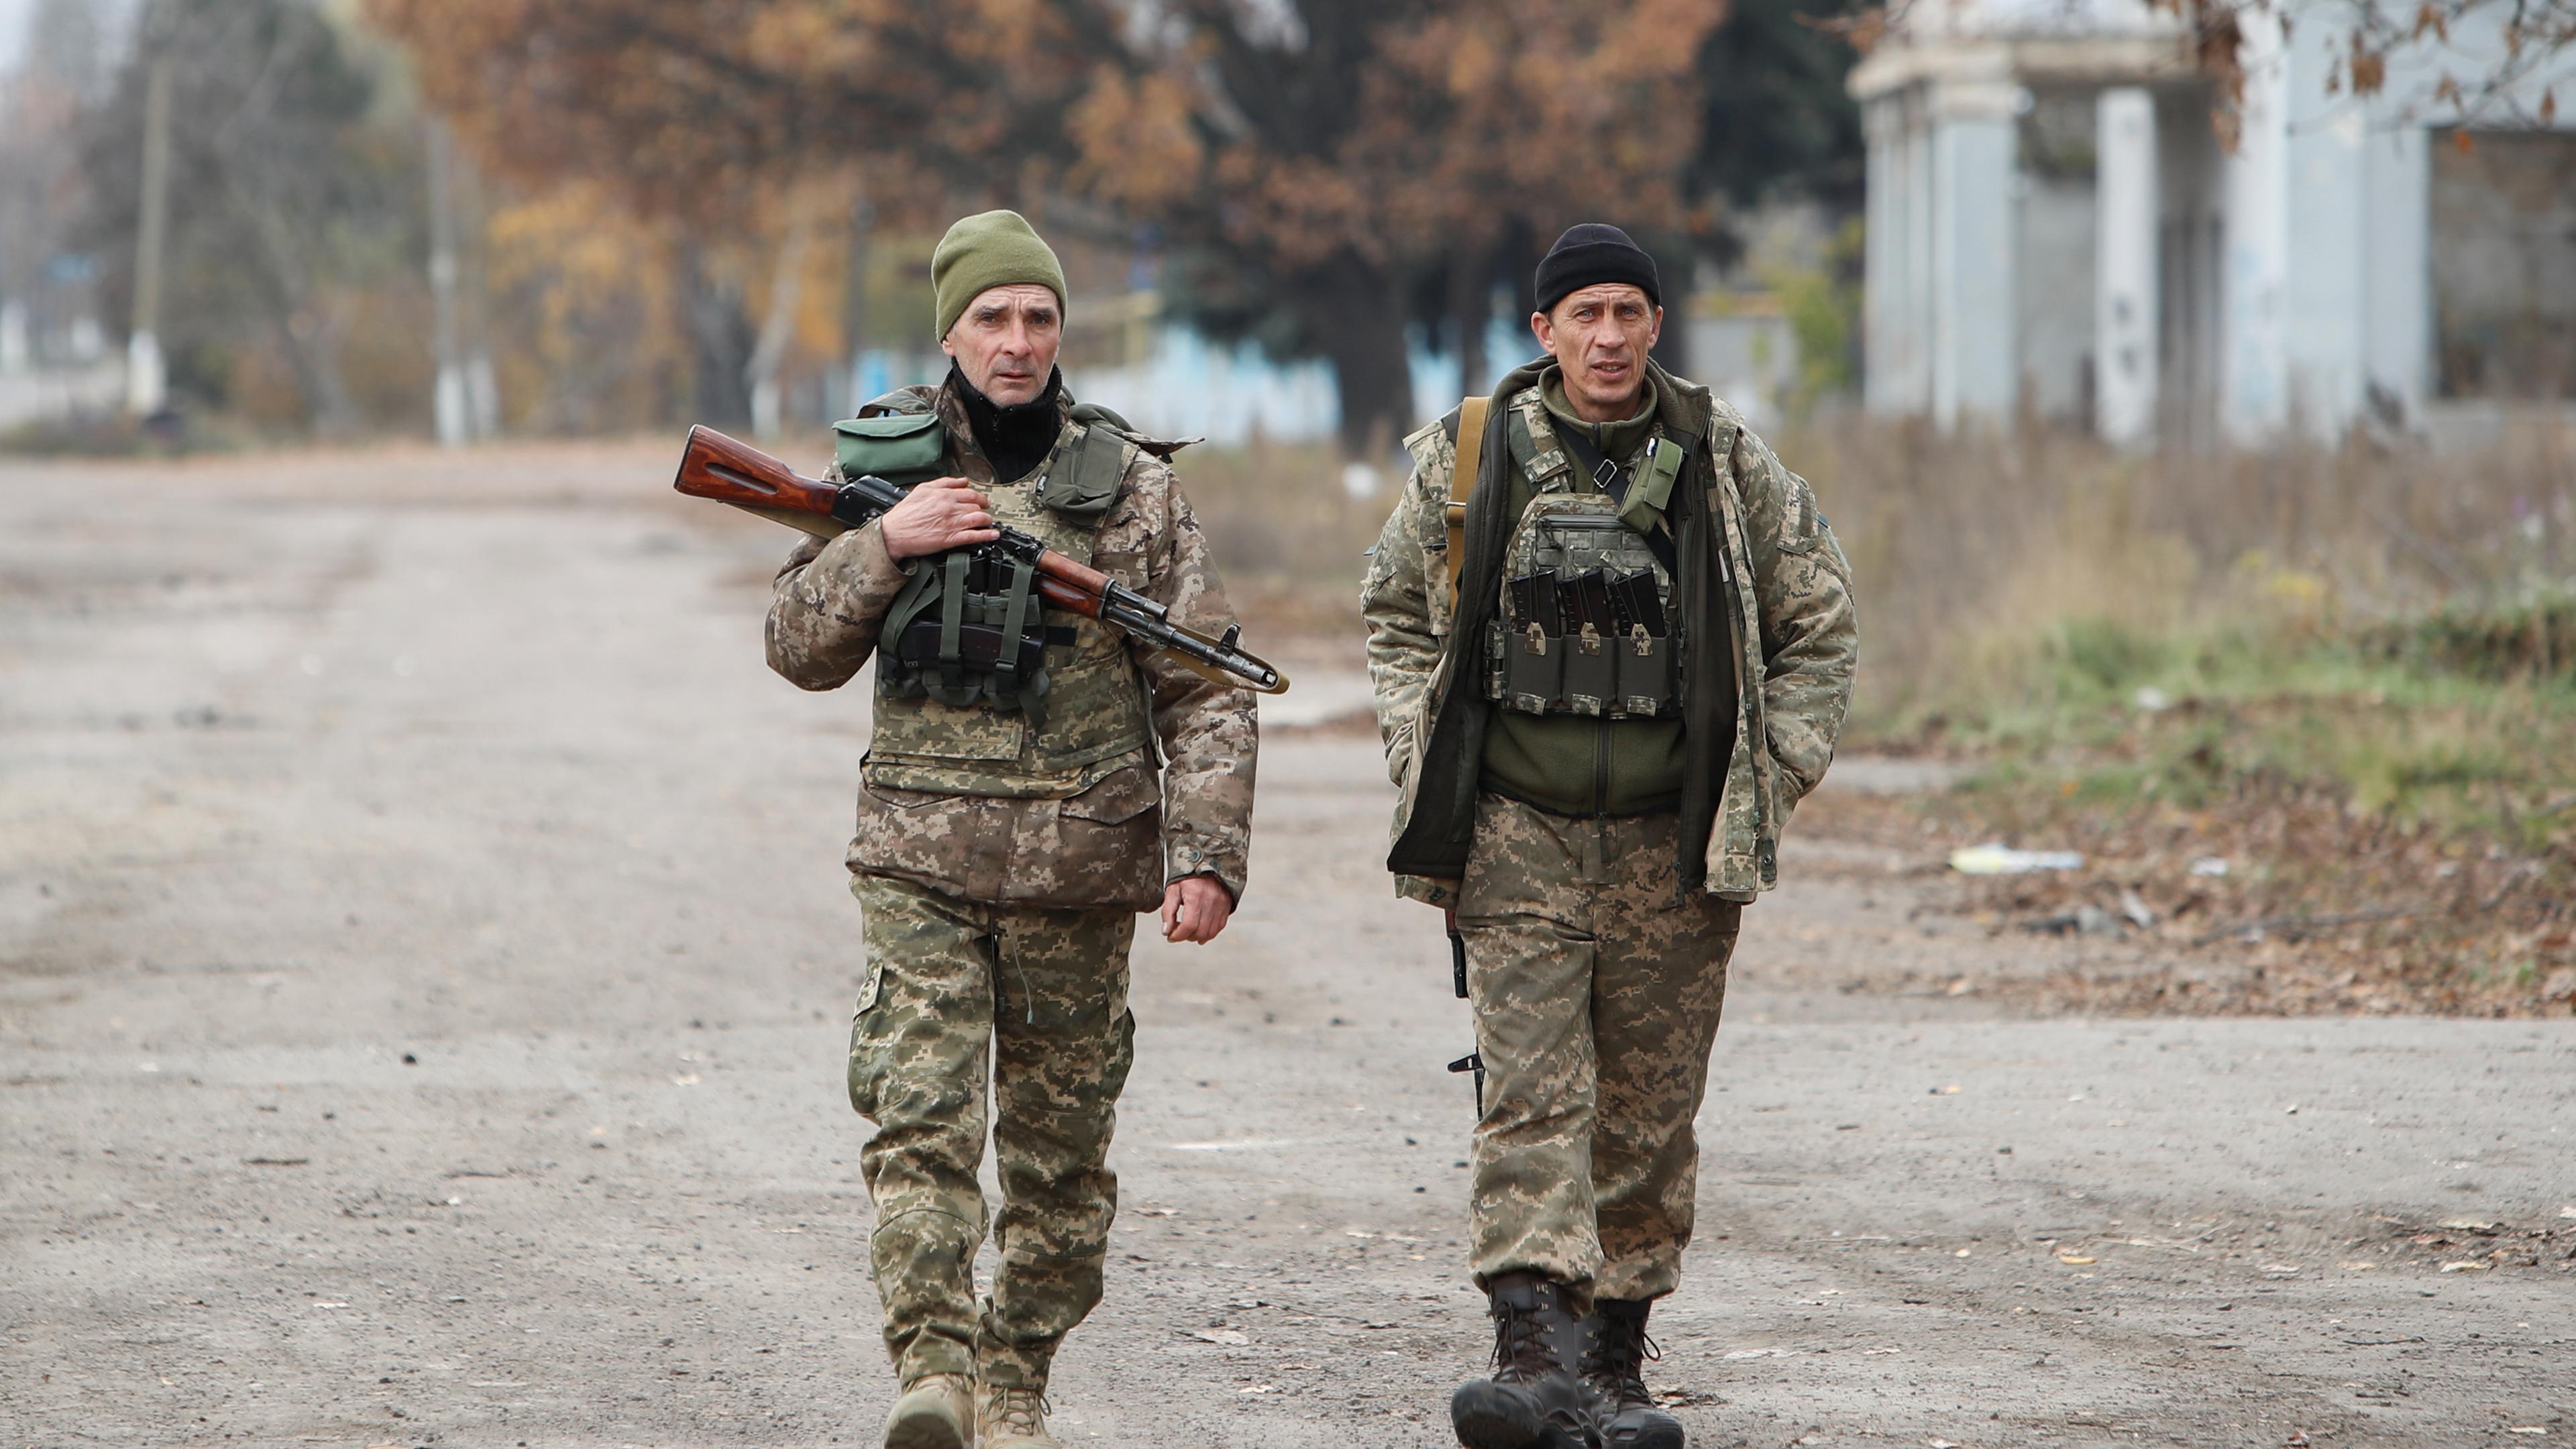 Kherson November 8, 2022, Two Ukrainian soldiers patrol a town in the Kherson region